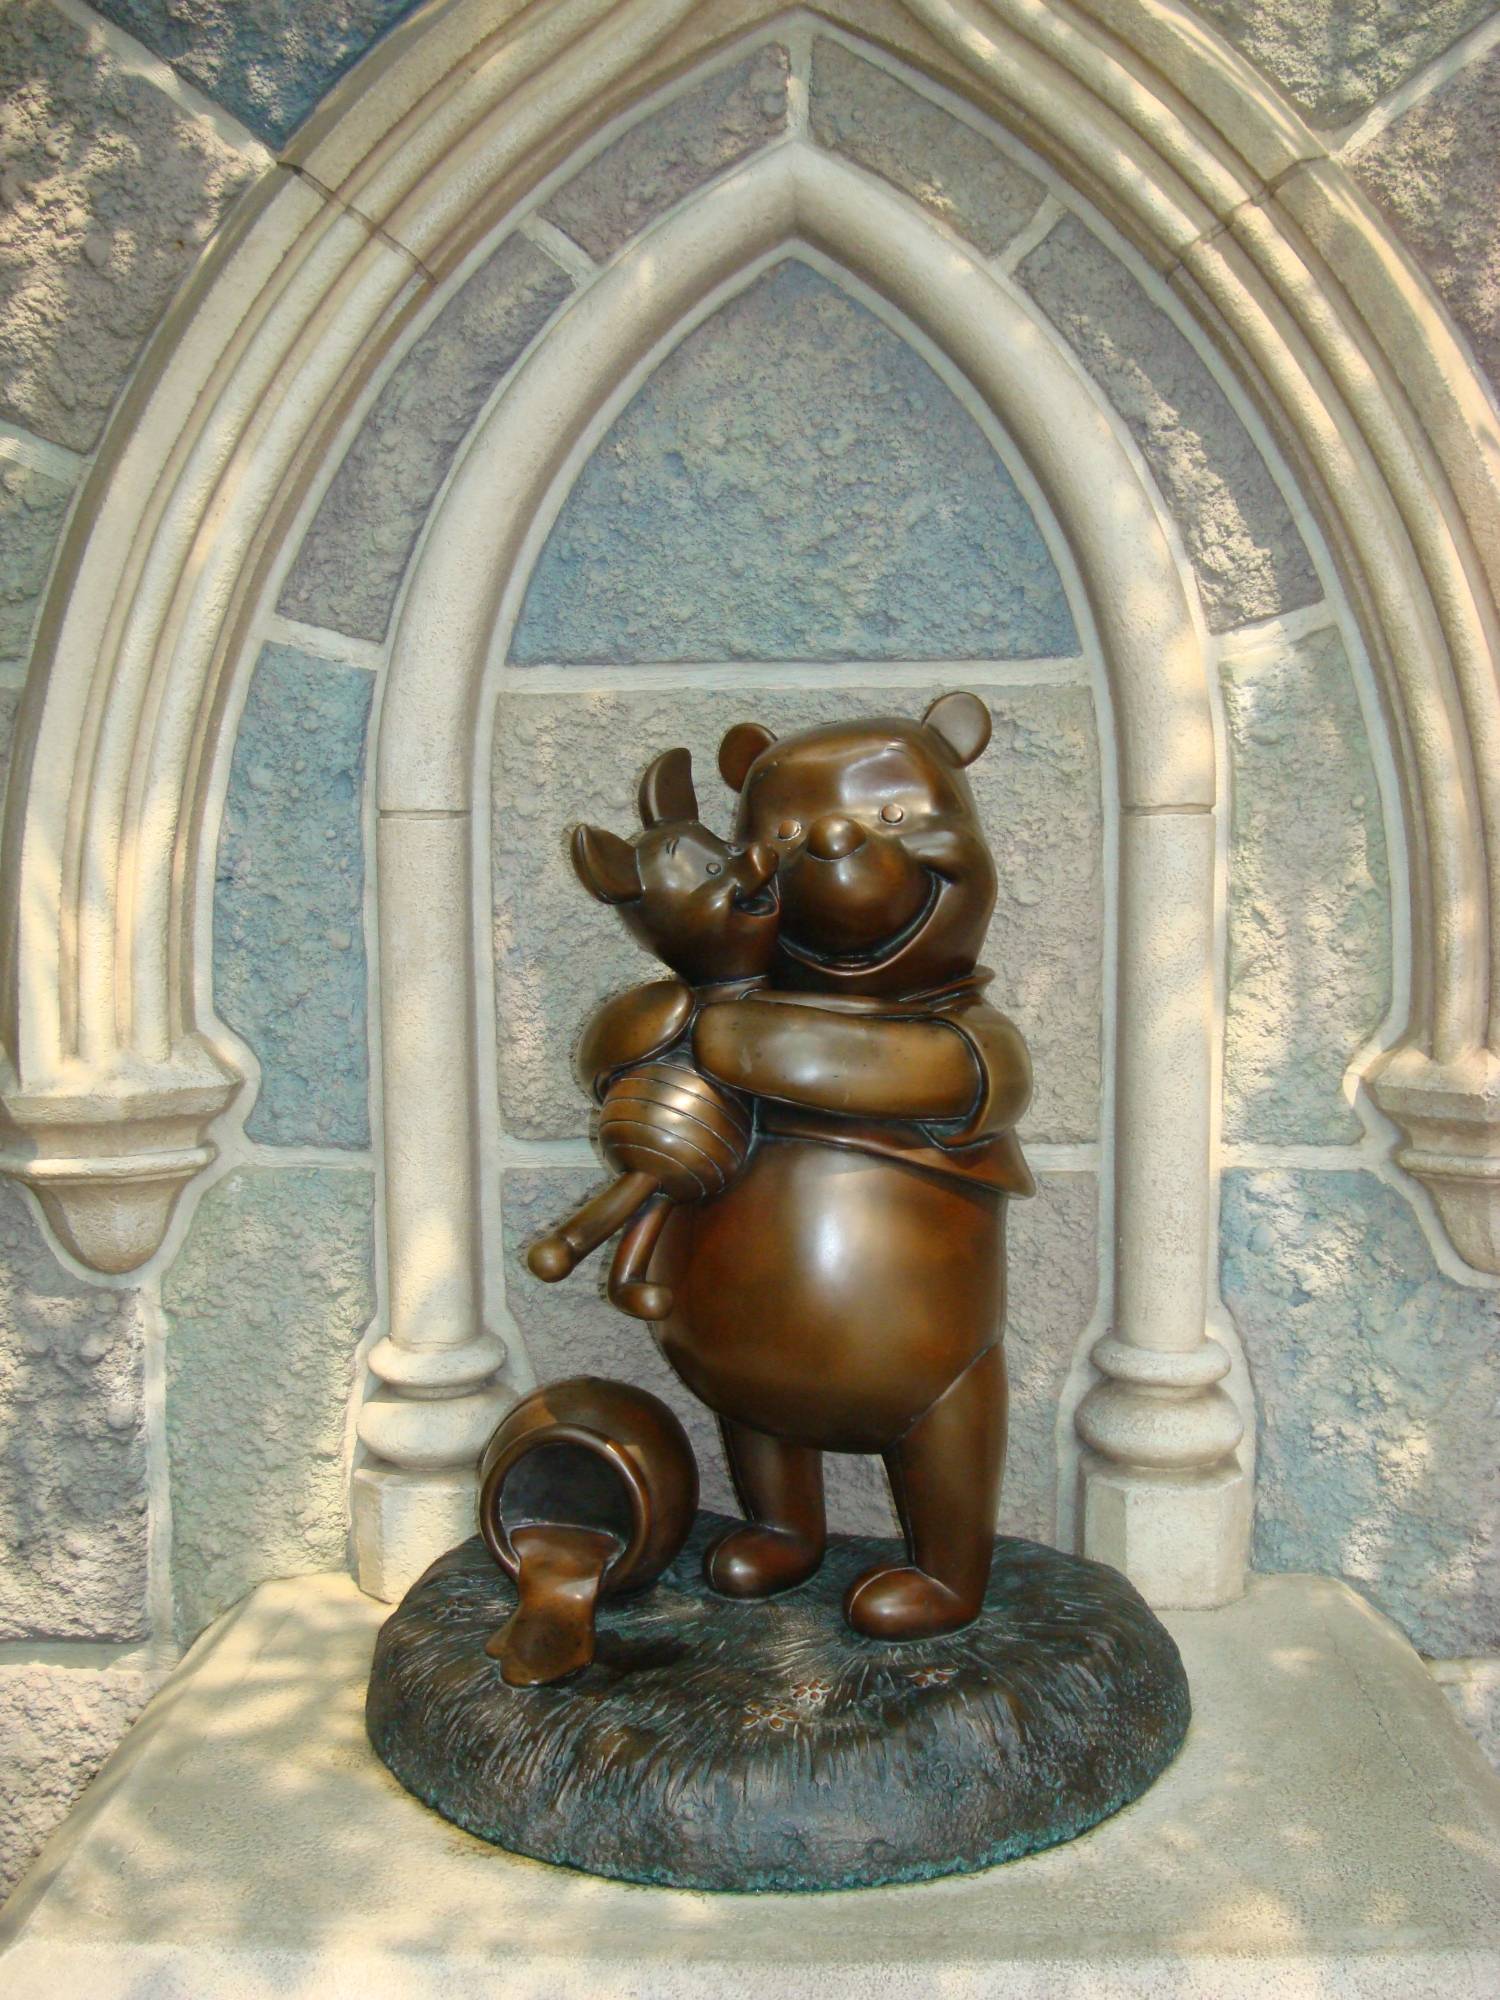 Hong Kong Disneyland - Winnie the Pooh statue